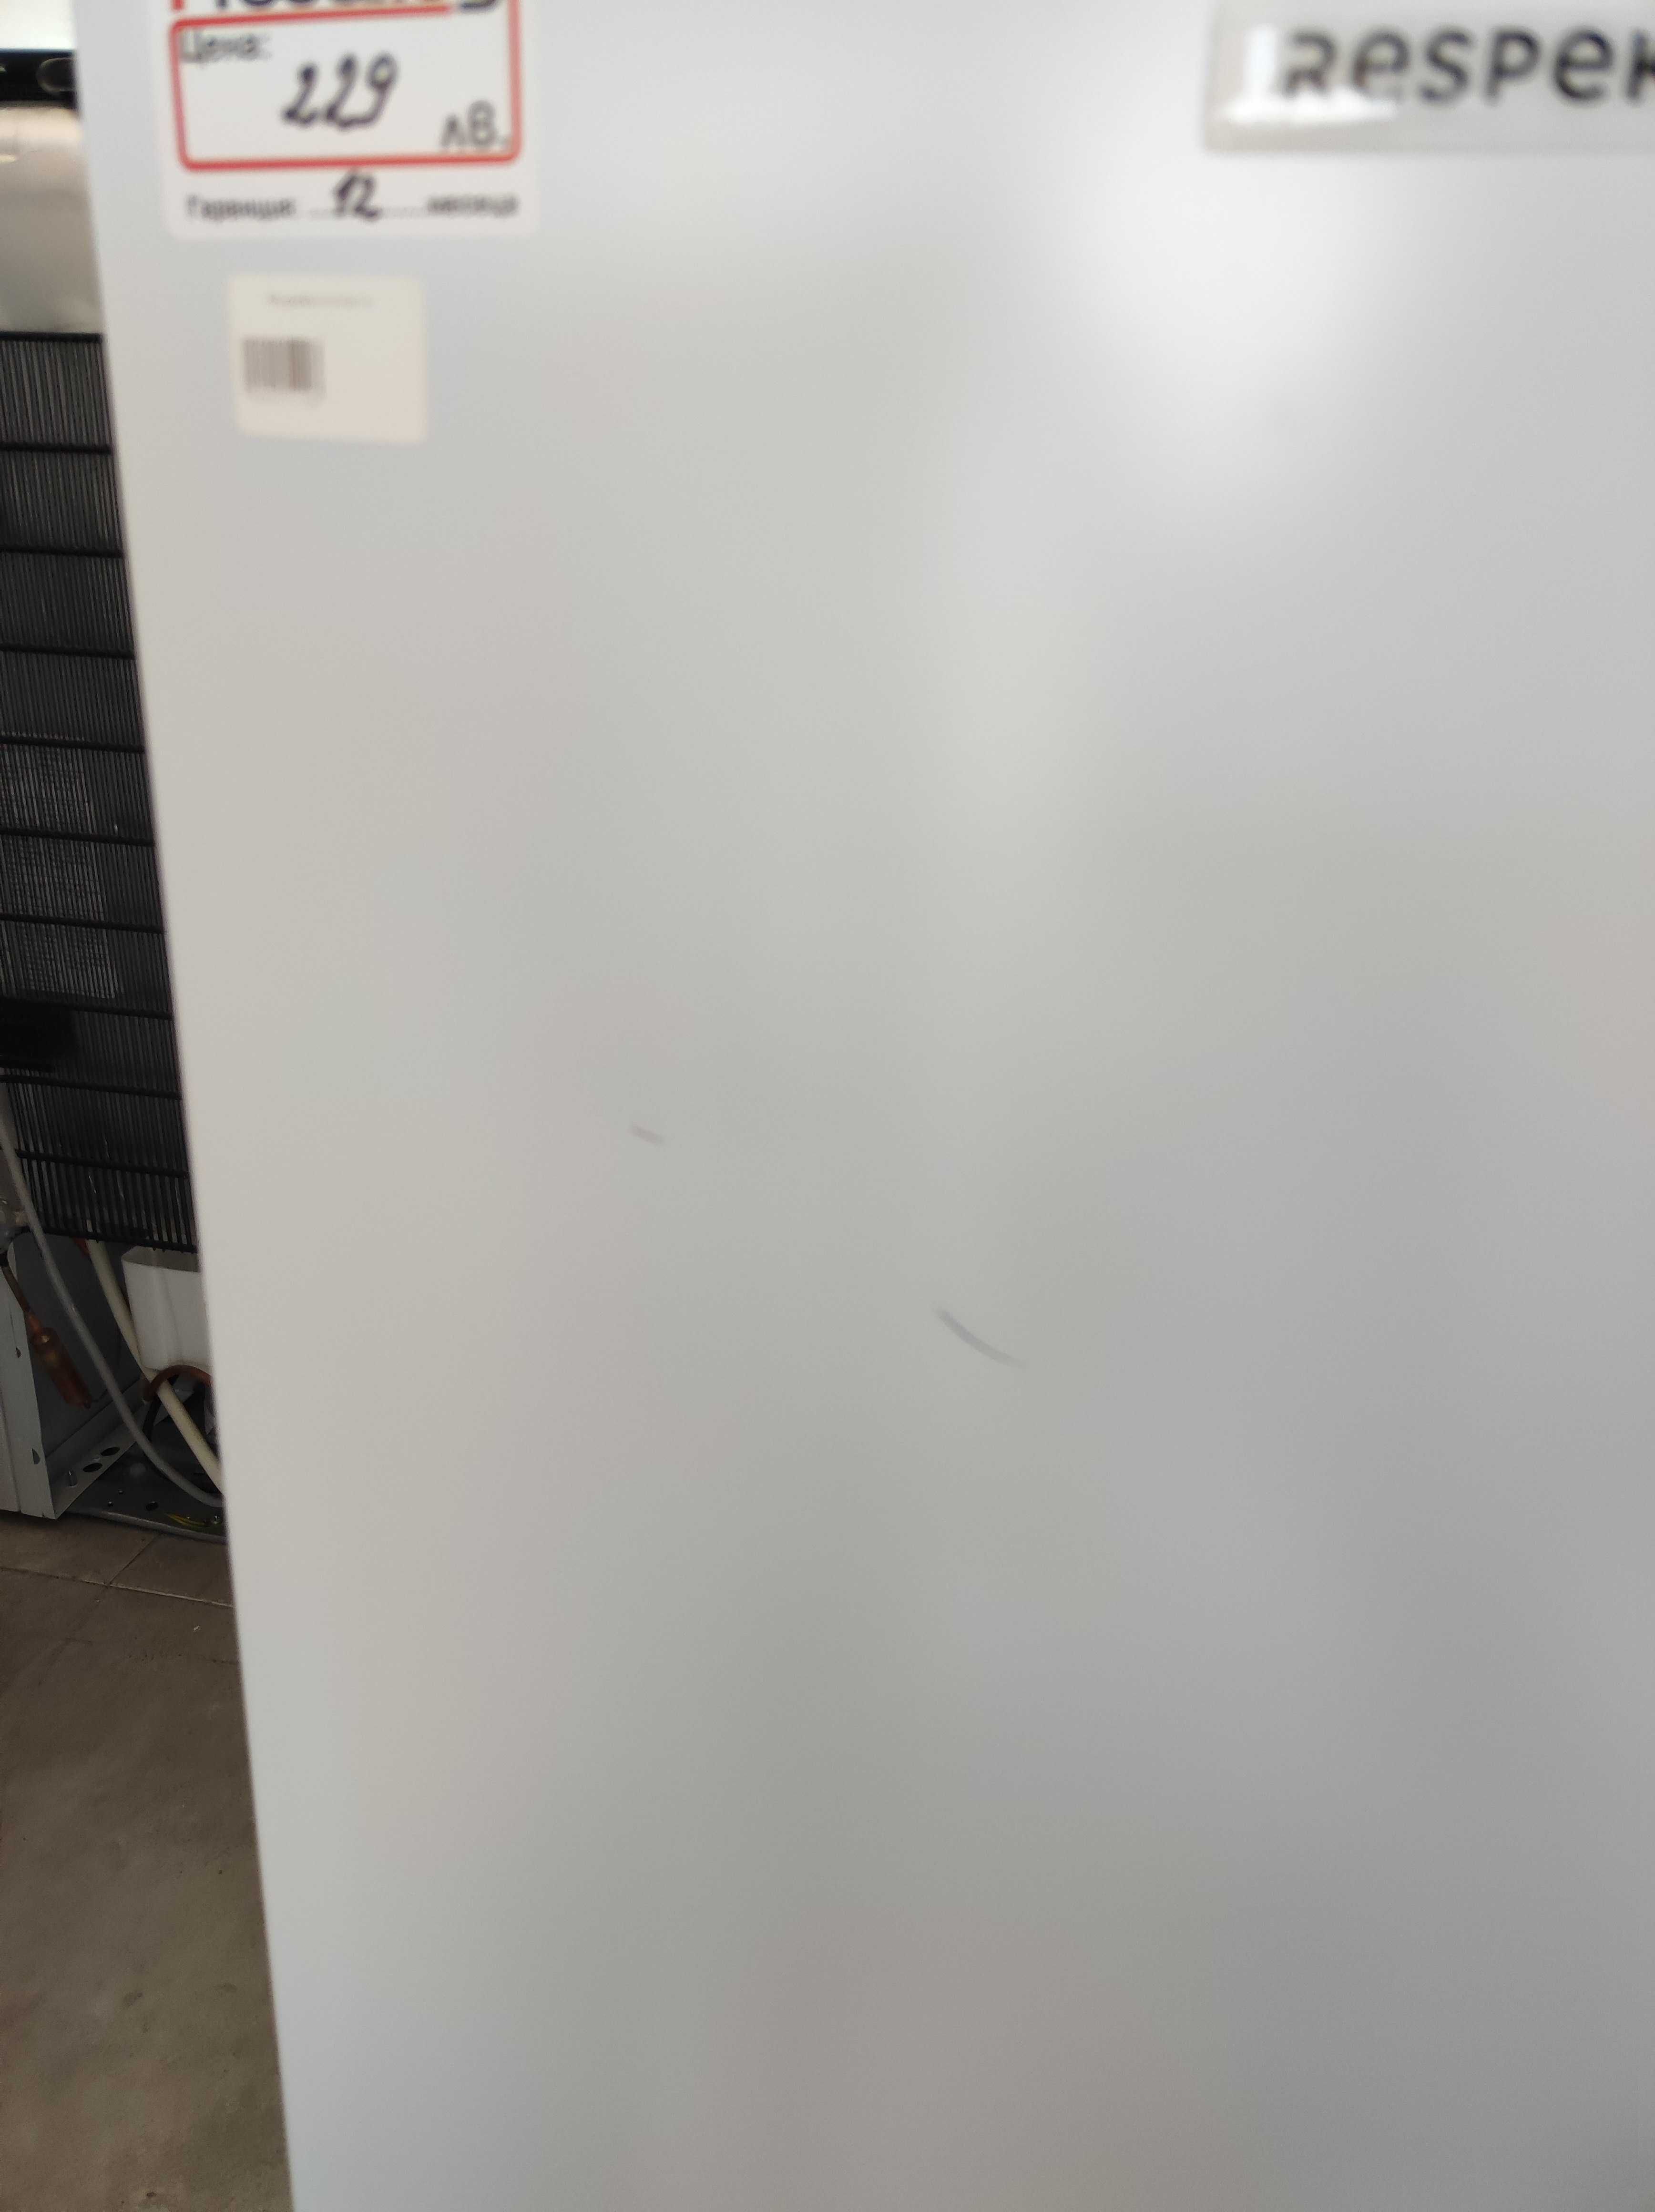 Хладилник за вграждане Respekta KSU50-11